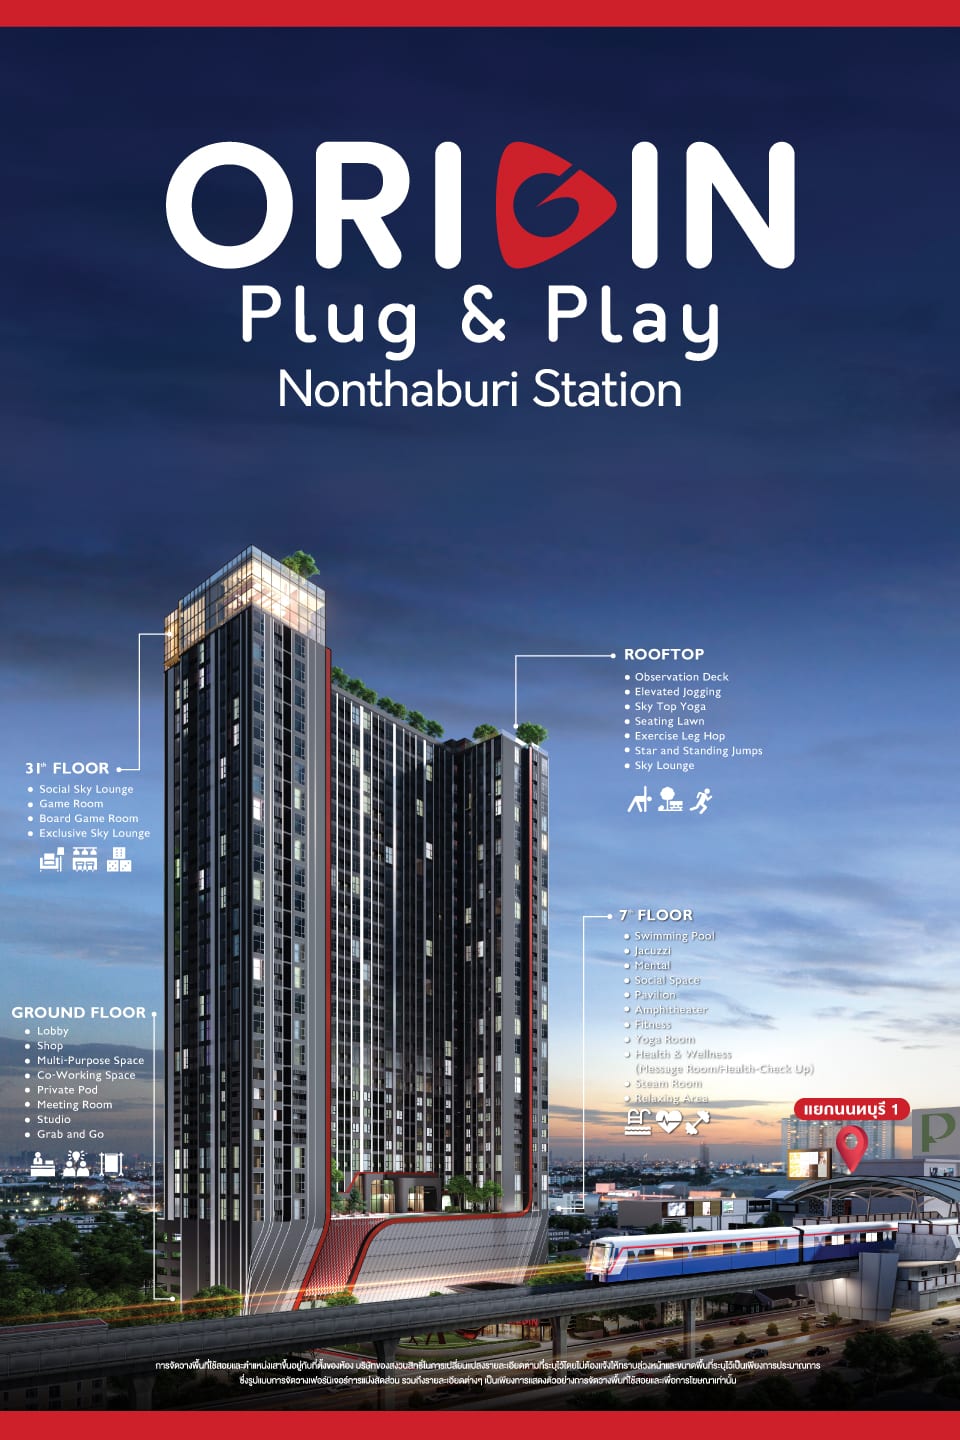 Origin Plug & Play Nonthaburi Station